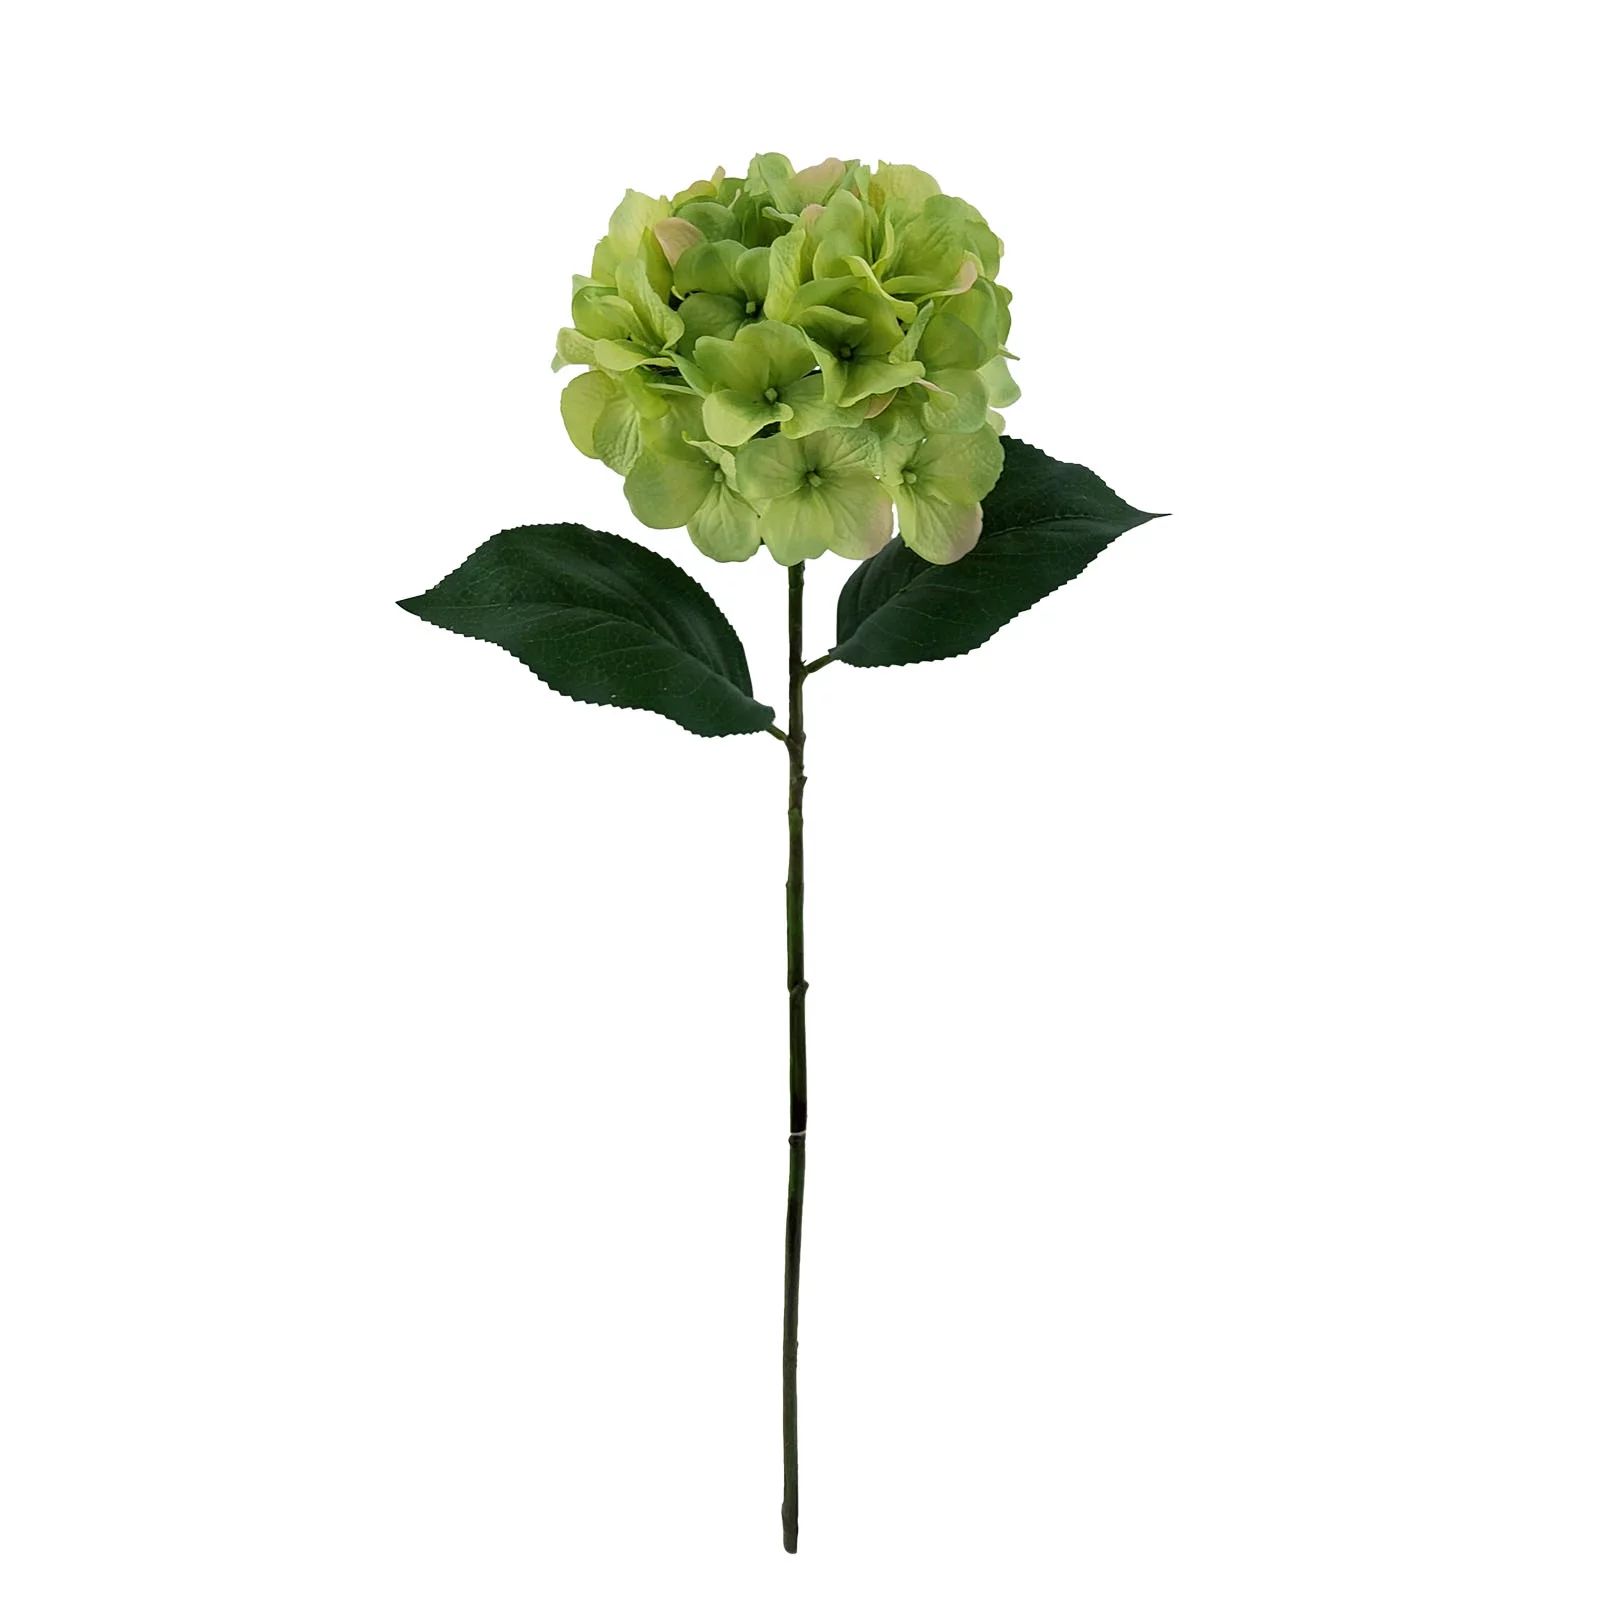 Mainstays 24 inch Artificial Flower Hydrangea Stem, Green Color. Indoor Use. | Walmart (US)